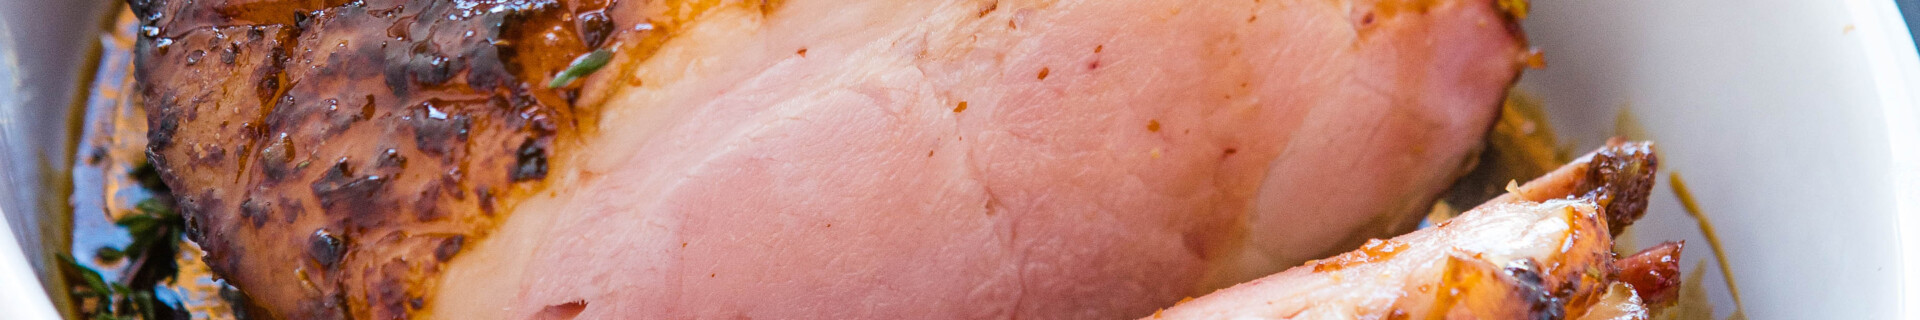 maple glazed ham in white dish, cut into slices